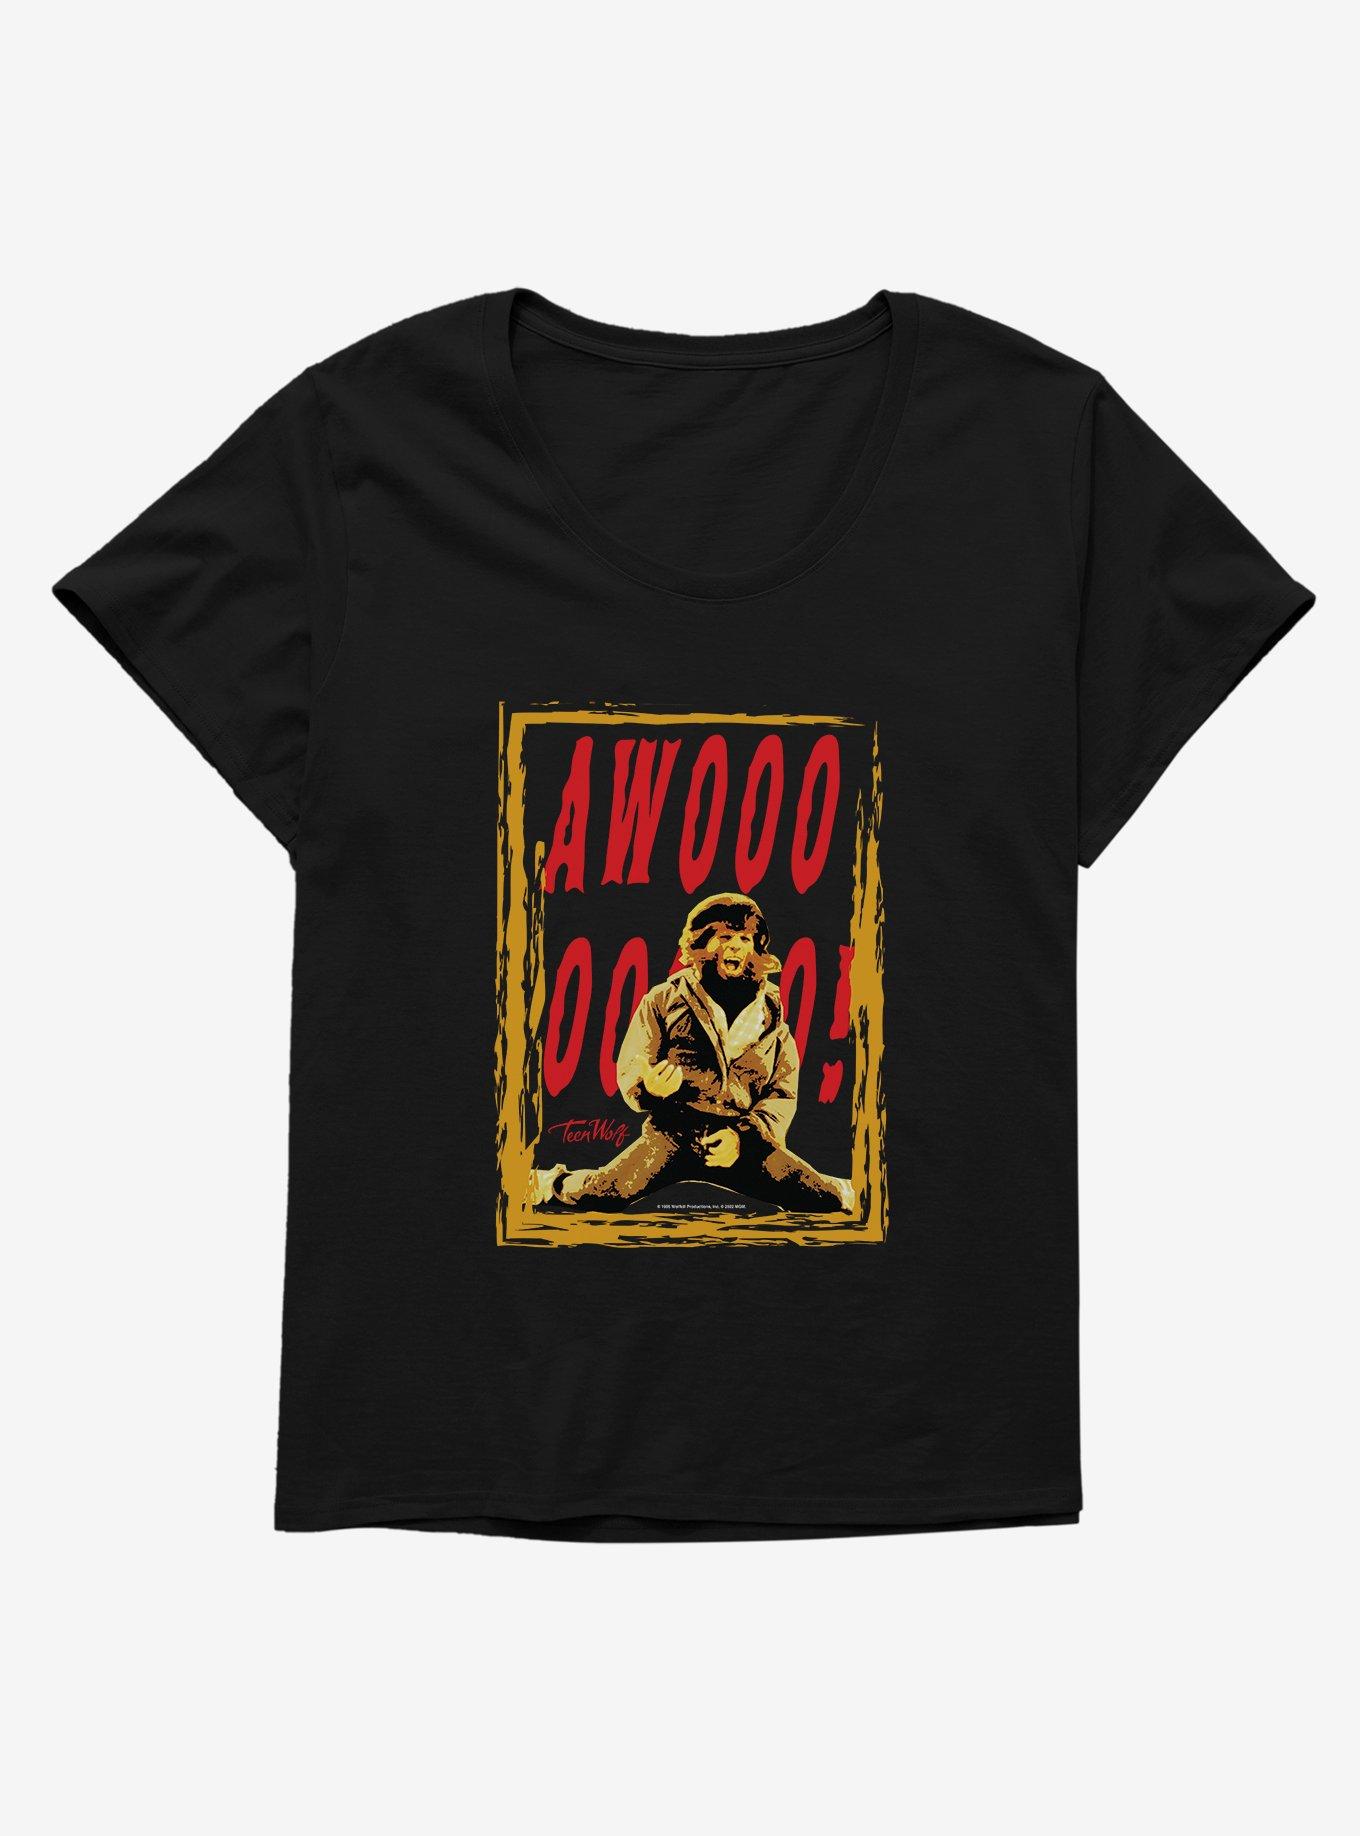 Teen Wolf Awoooo! Girls T-Shirt Plus